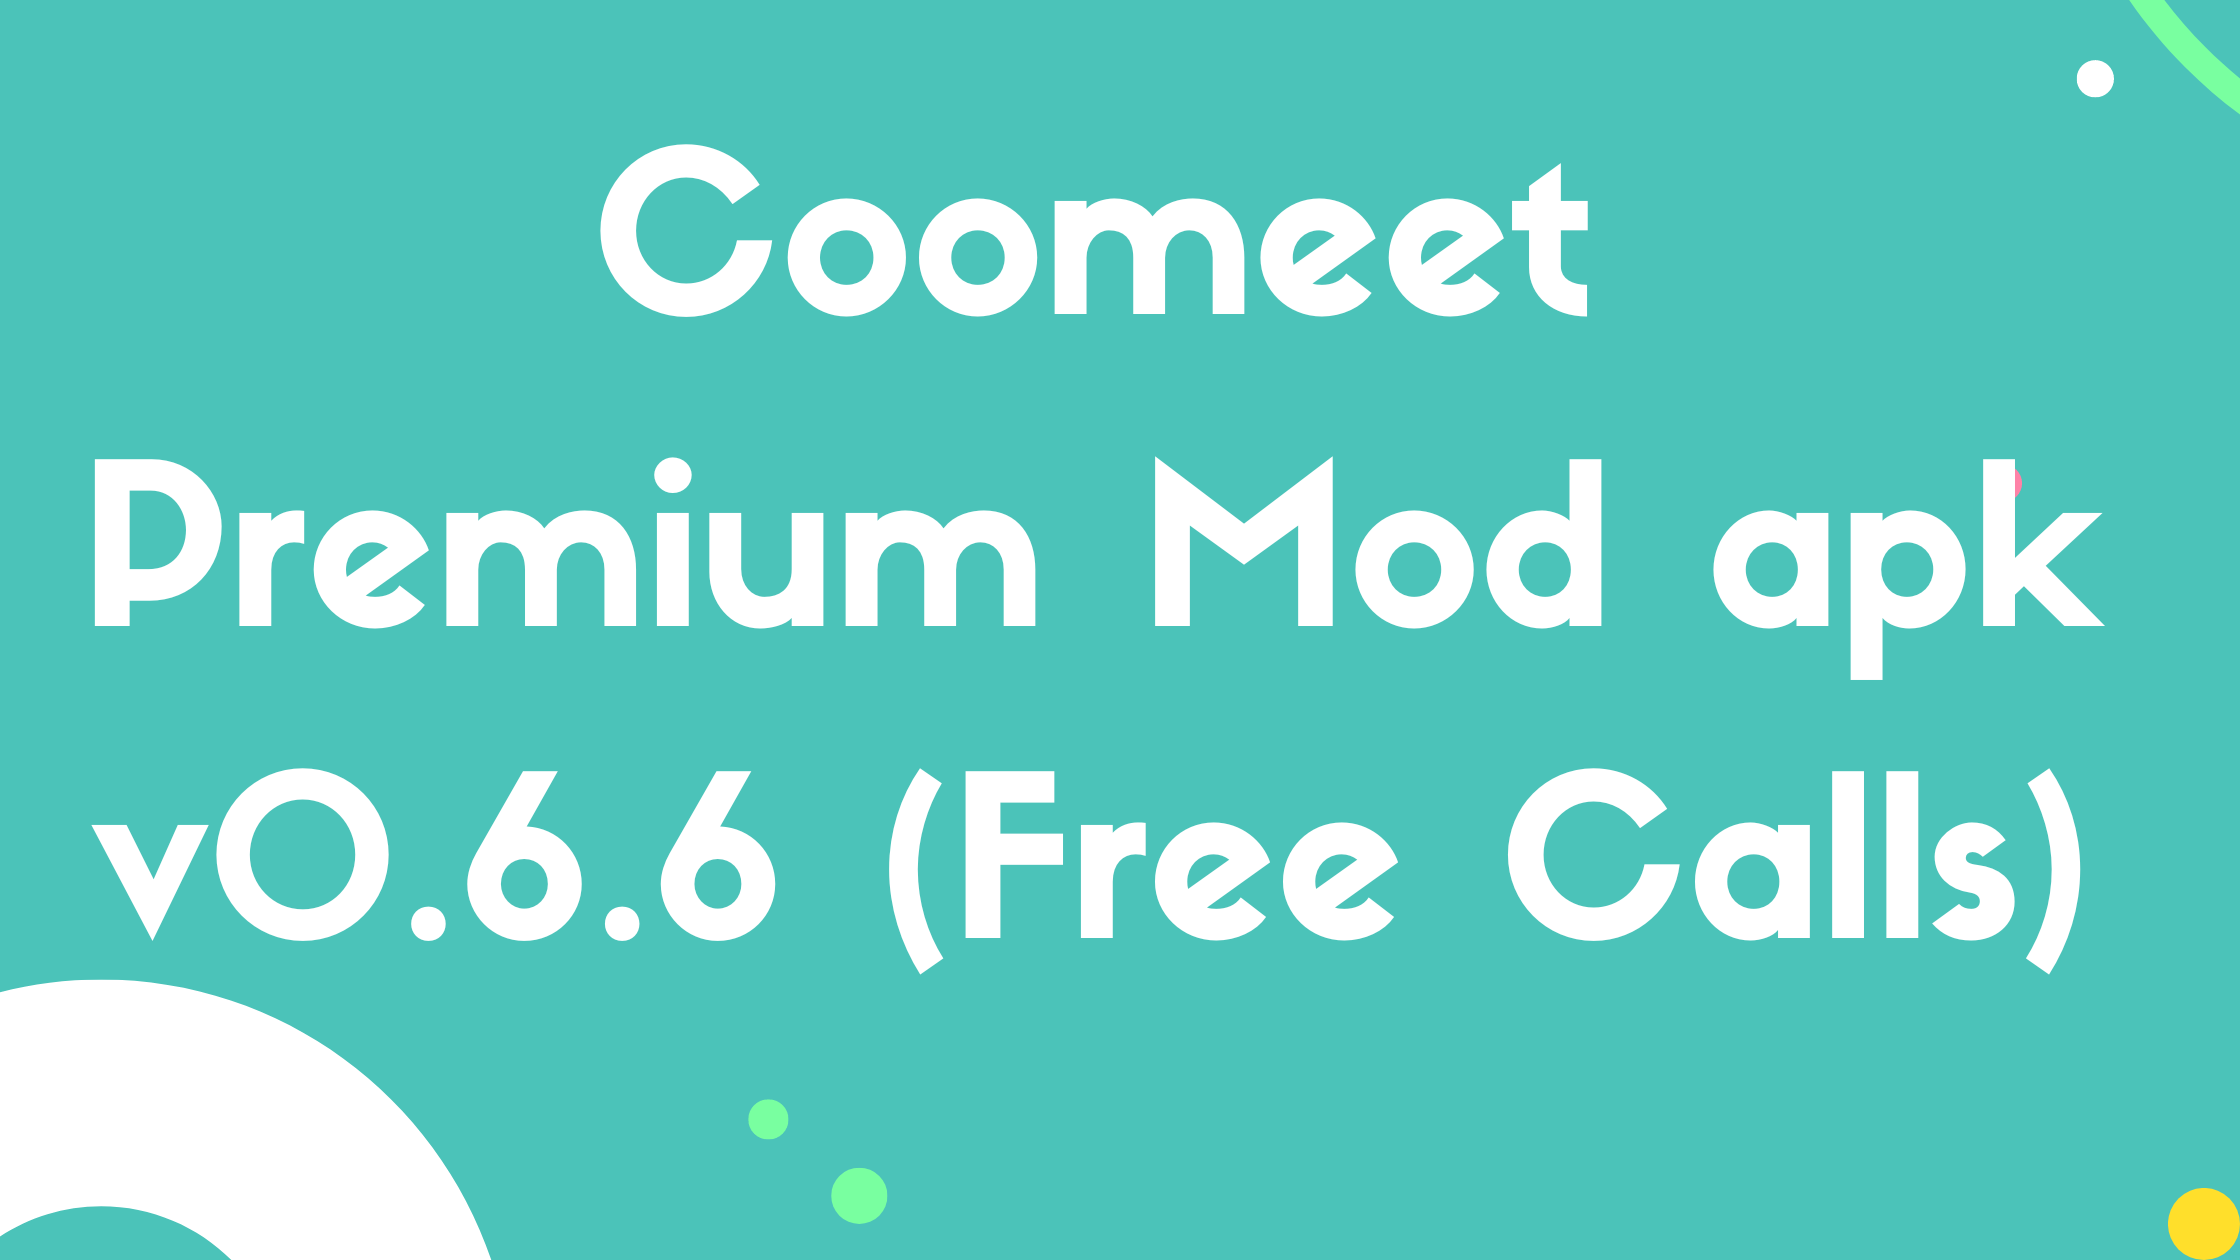 Coomeet Premium Mod apk v0.6.6 (Free Calls)